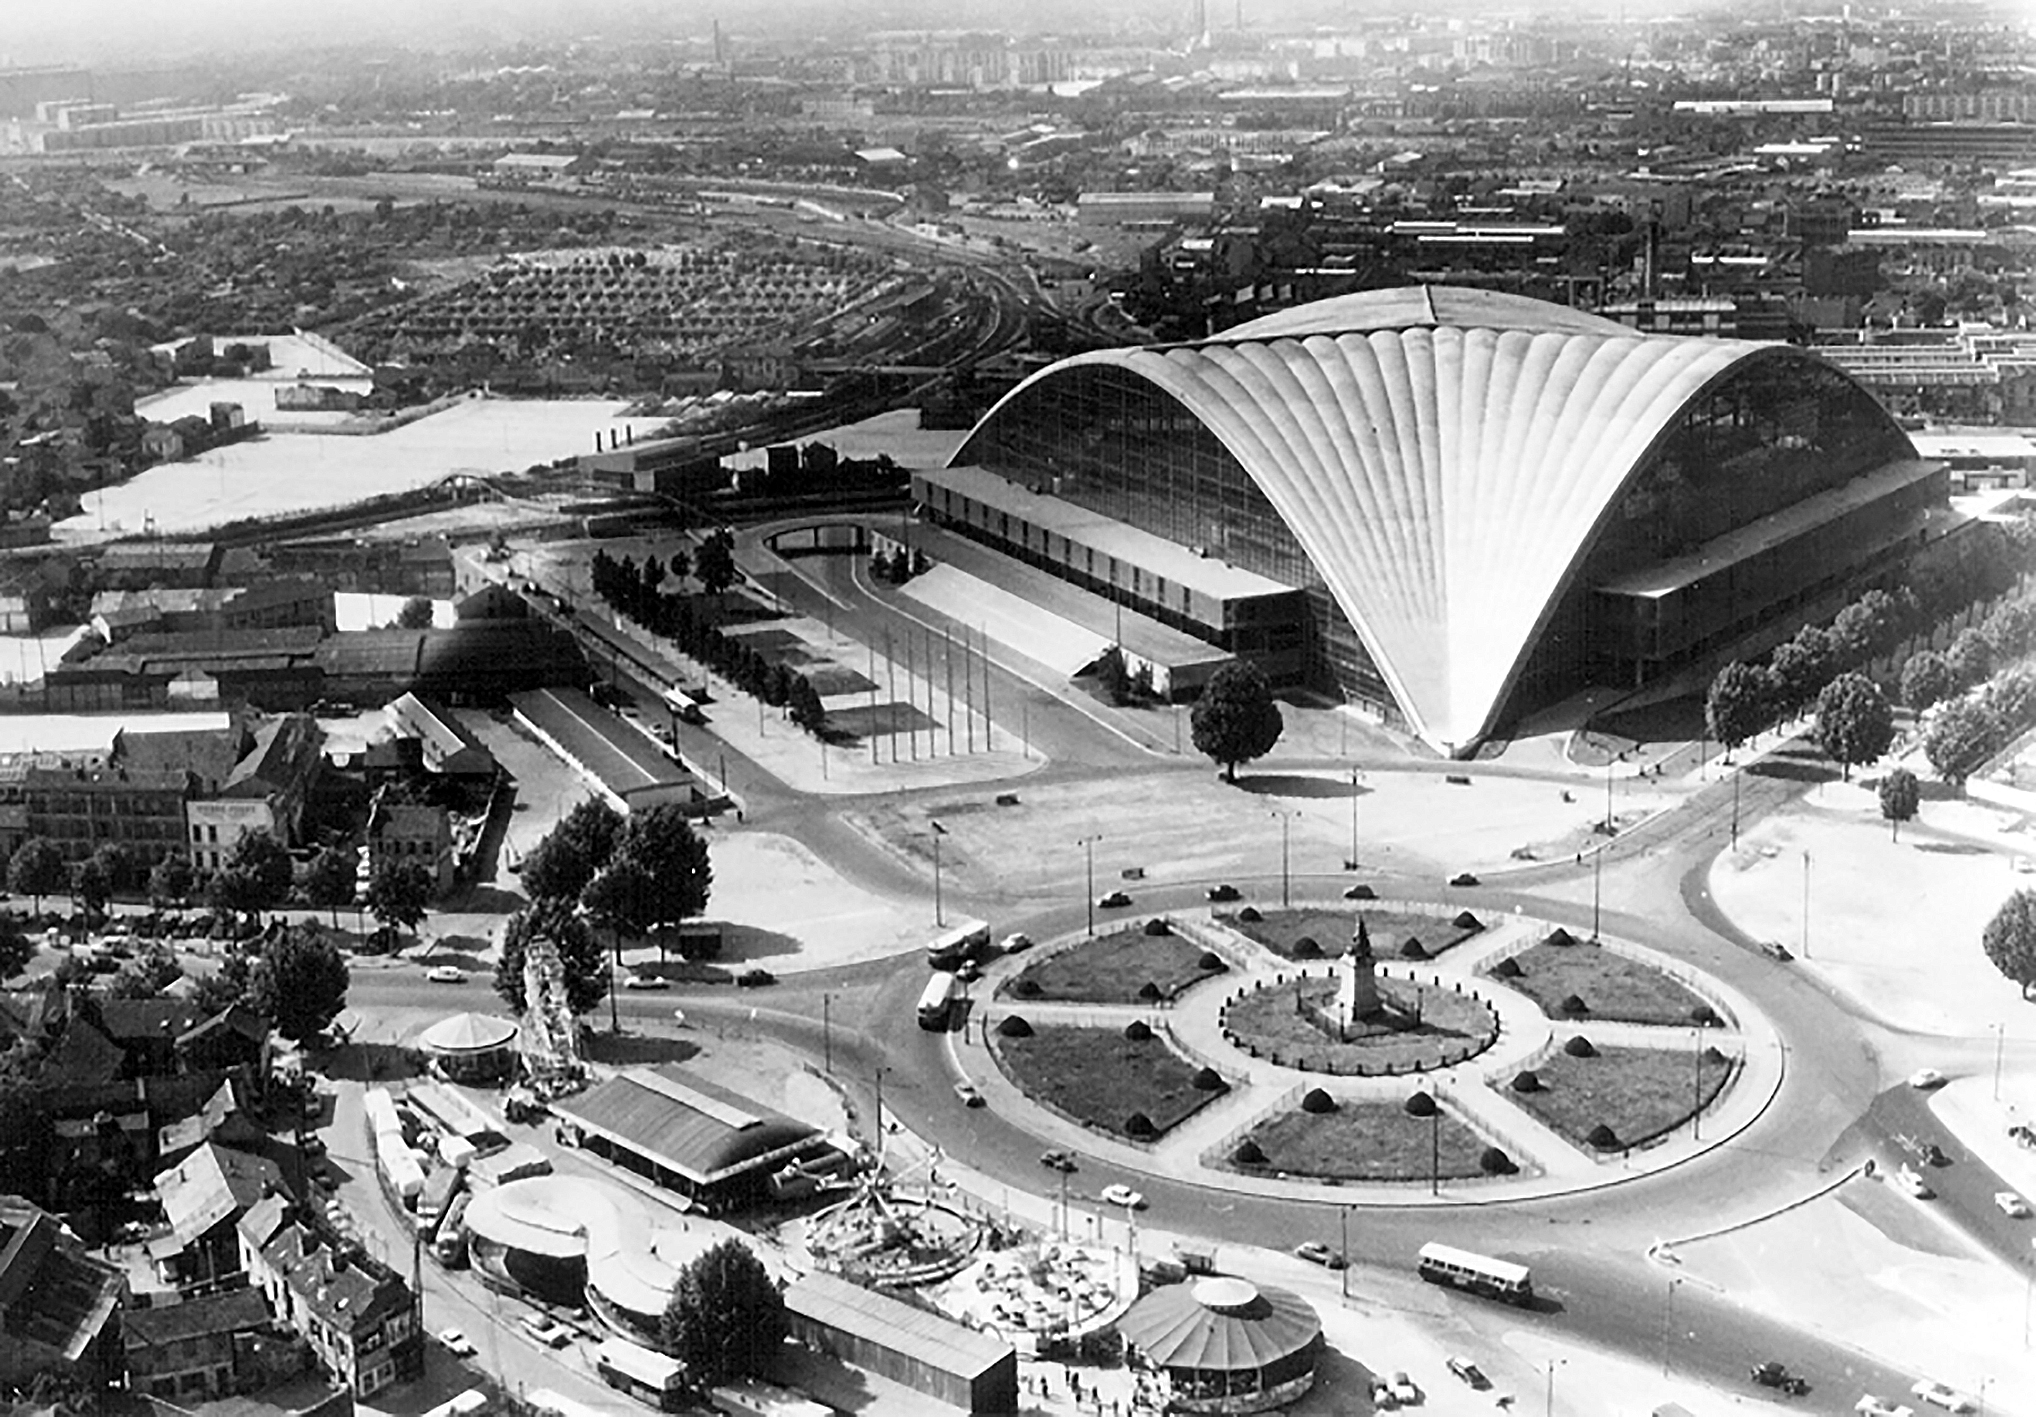 C.N.I.T., Centre National des Industries et des Techniques, Paris-La Défense, 1956–1958 (architects R. Camelot, J. de Mailly and B. H. Zehrfuss). In the center of the traffic circle, a statue "La Défense de Paris, 1871", which will give its name to the future business district.